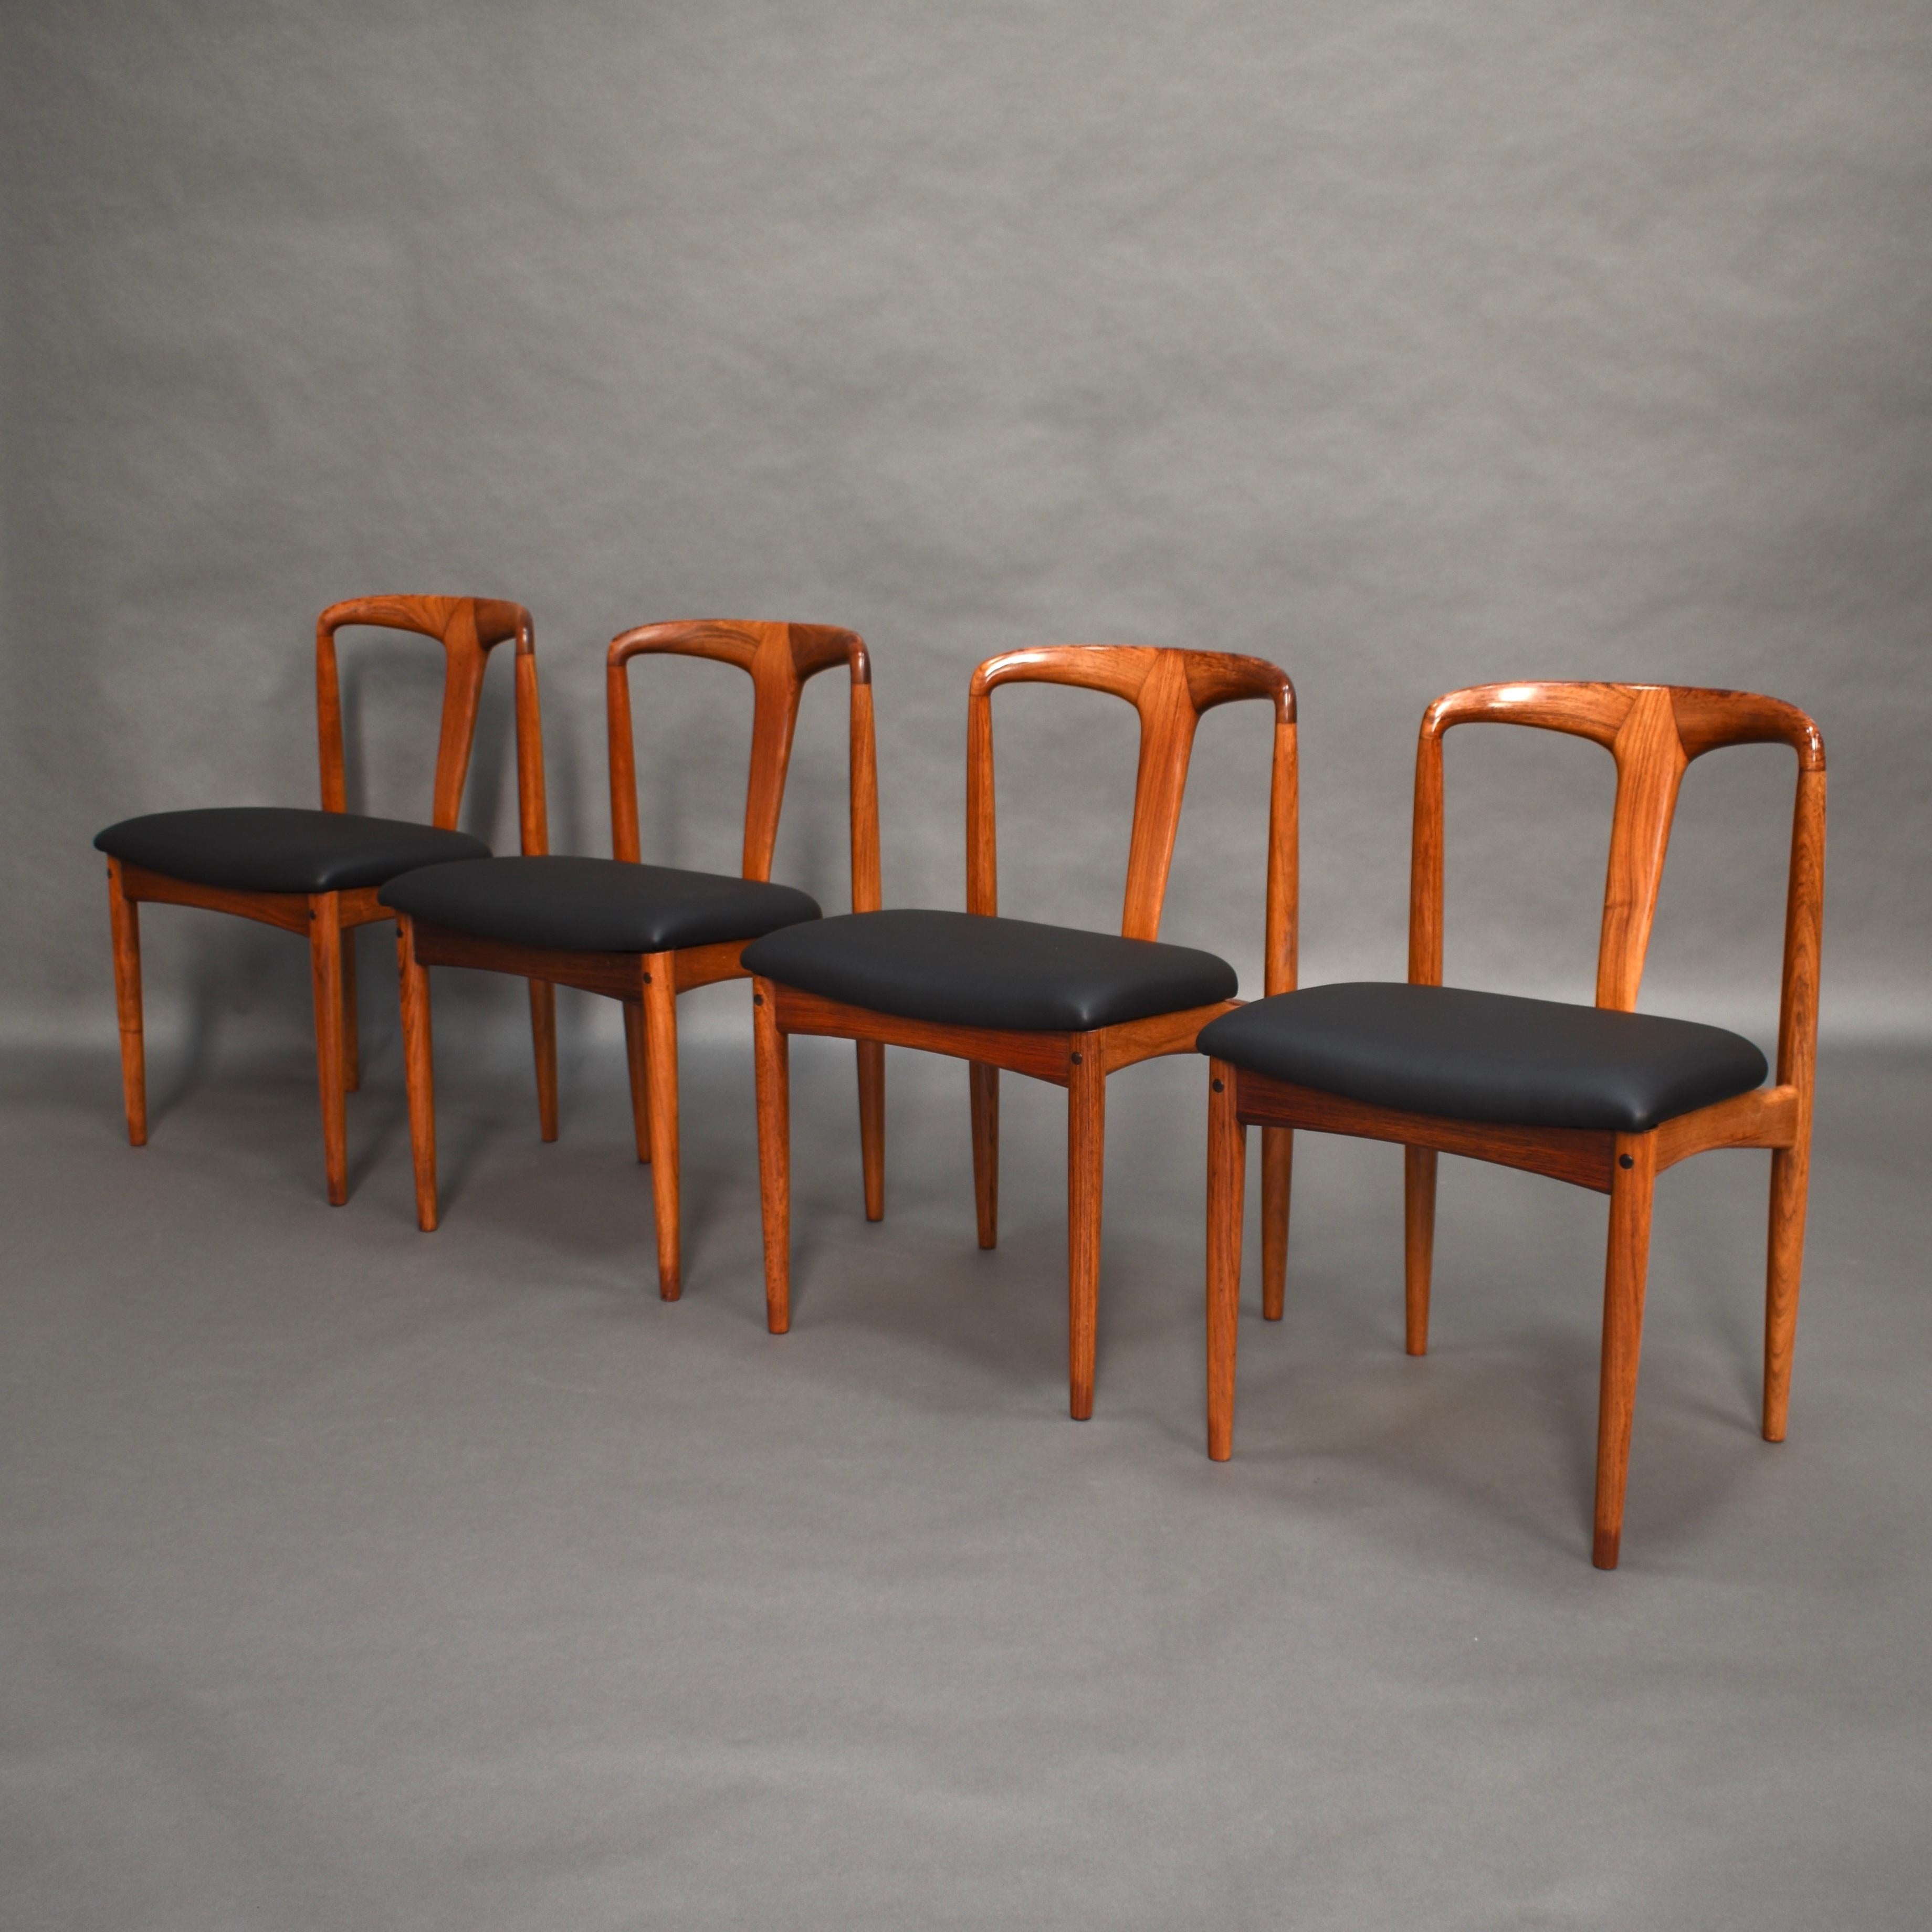 Scandinavian Modern Scandinavian Johannes Andersen Chairs with New Upholstery, Denmark, 1960s